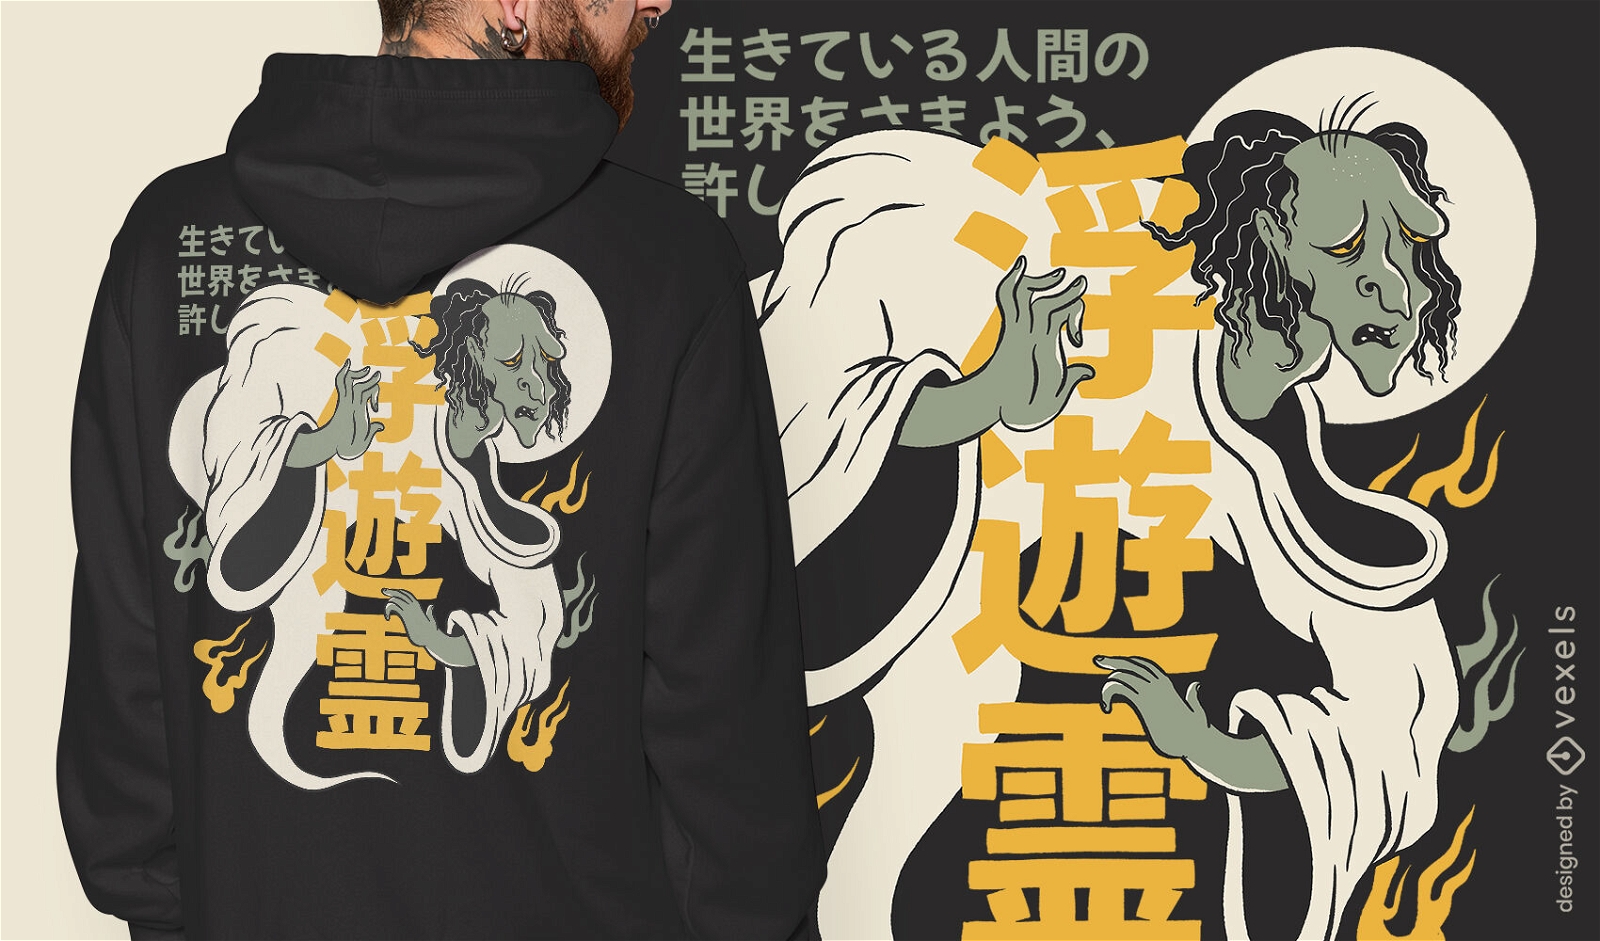 Japanese ghost creepy t-shirt design